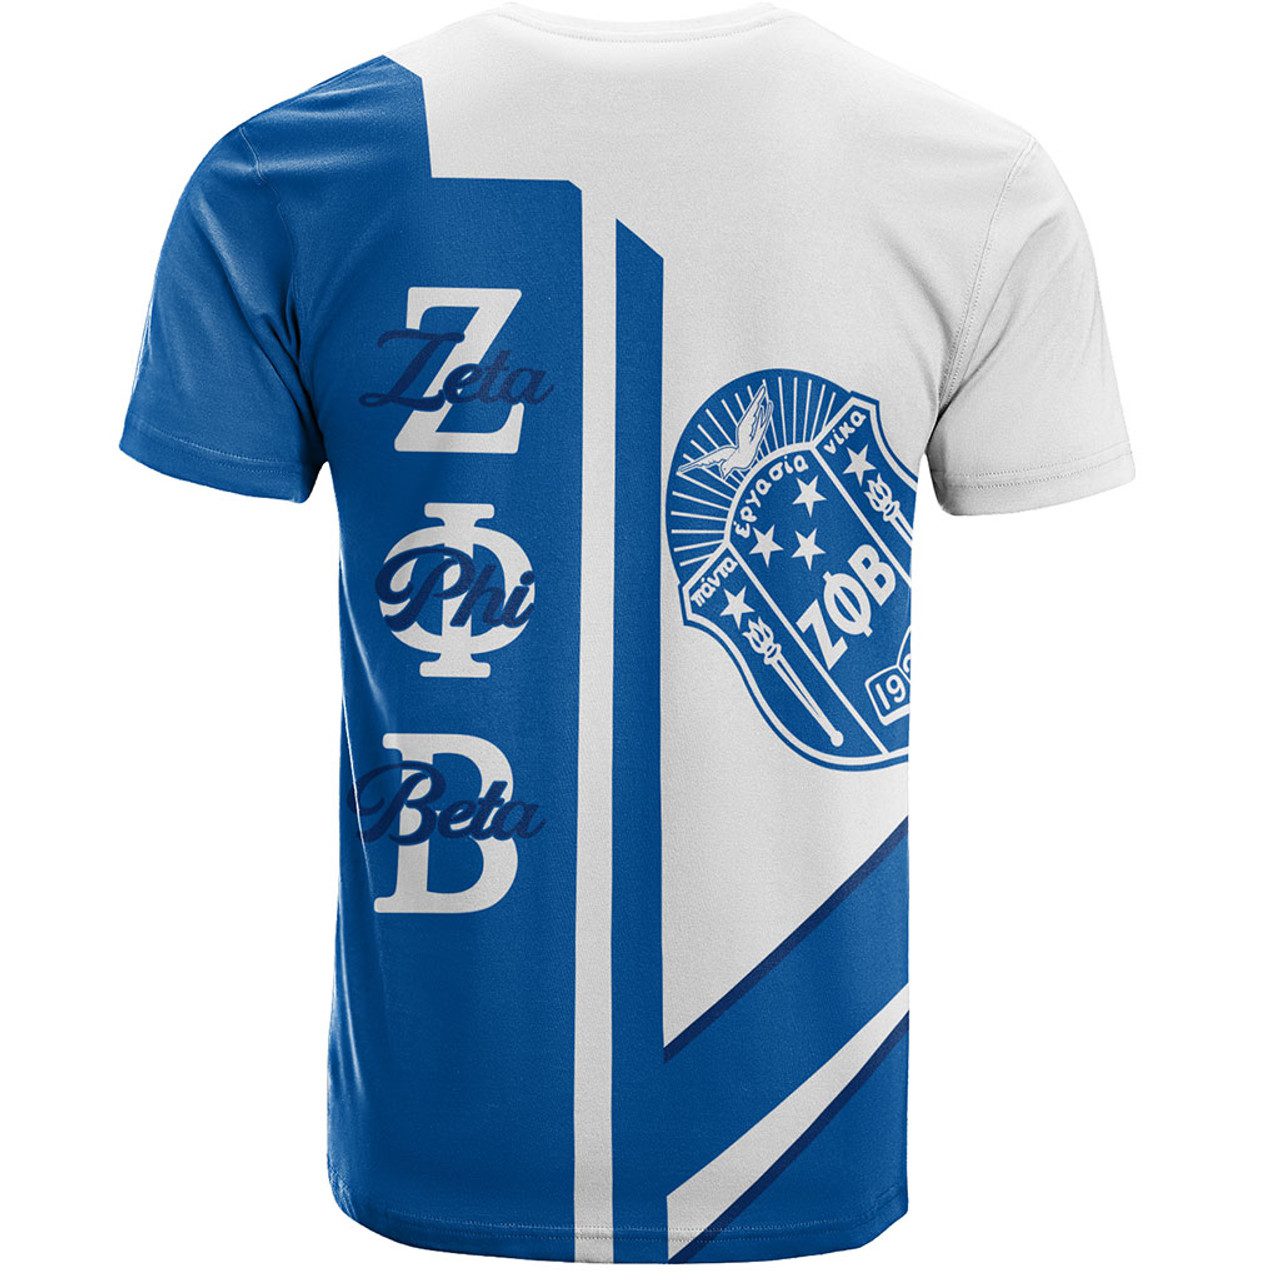 Zeta Phi Beta T-Shirt Half Concept